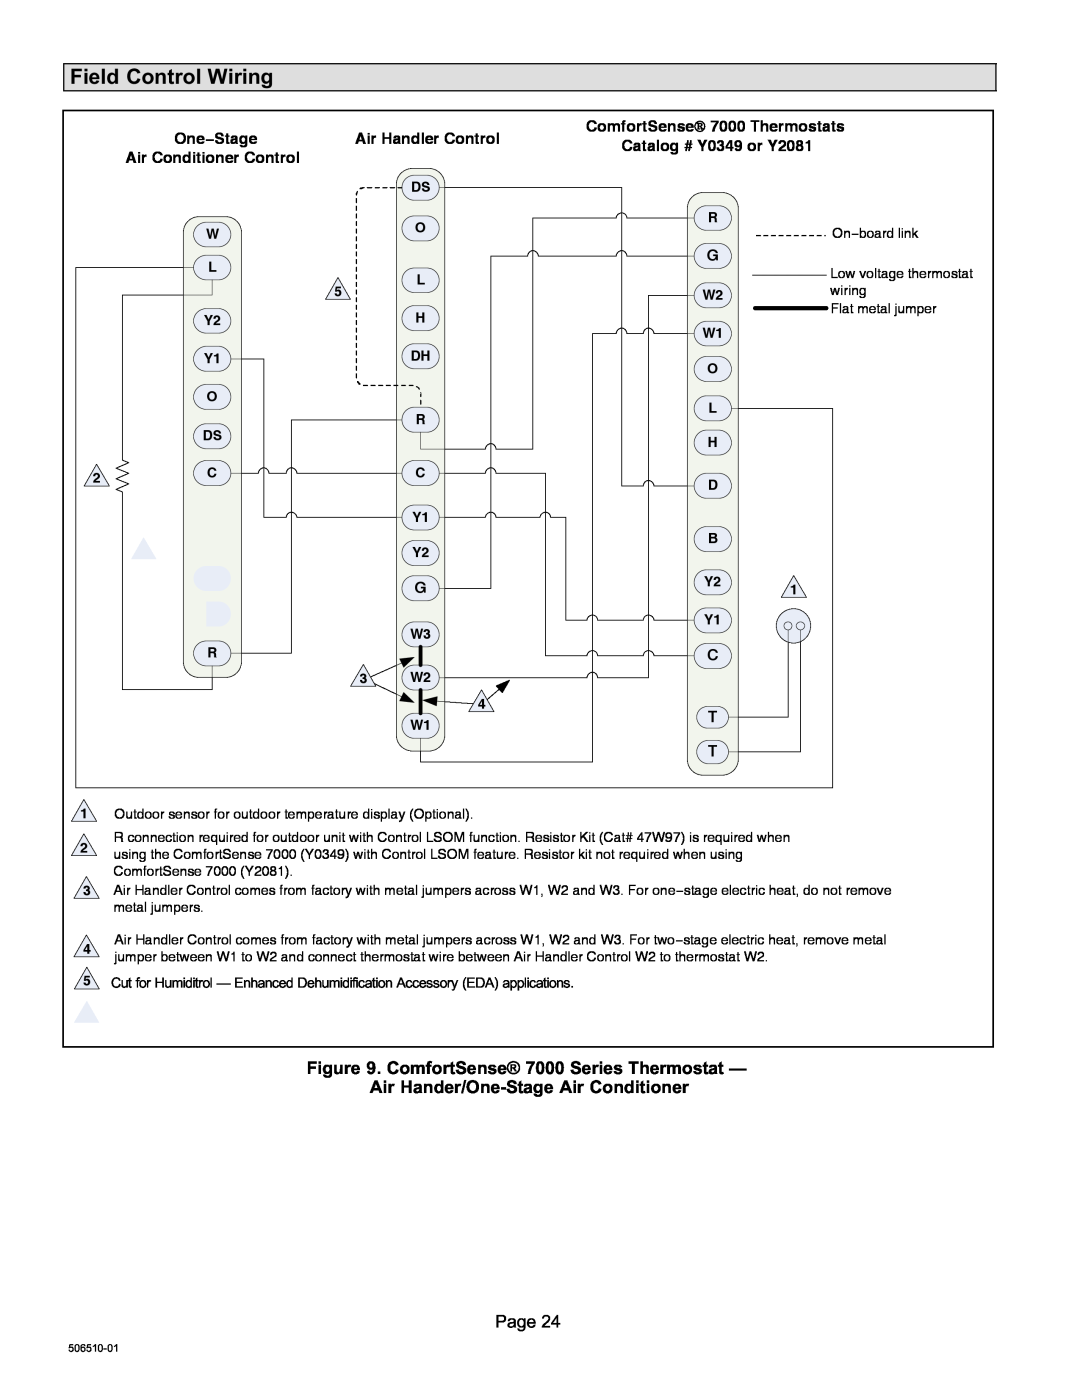 Lennox International Inc 506510-01 installation instructions Field Control Wiring, ComfortSense 7000 Series Thermostat 